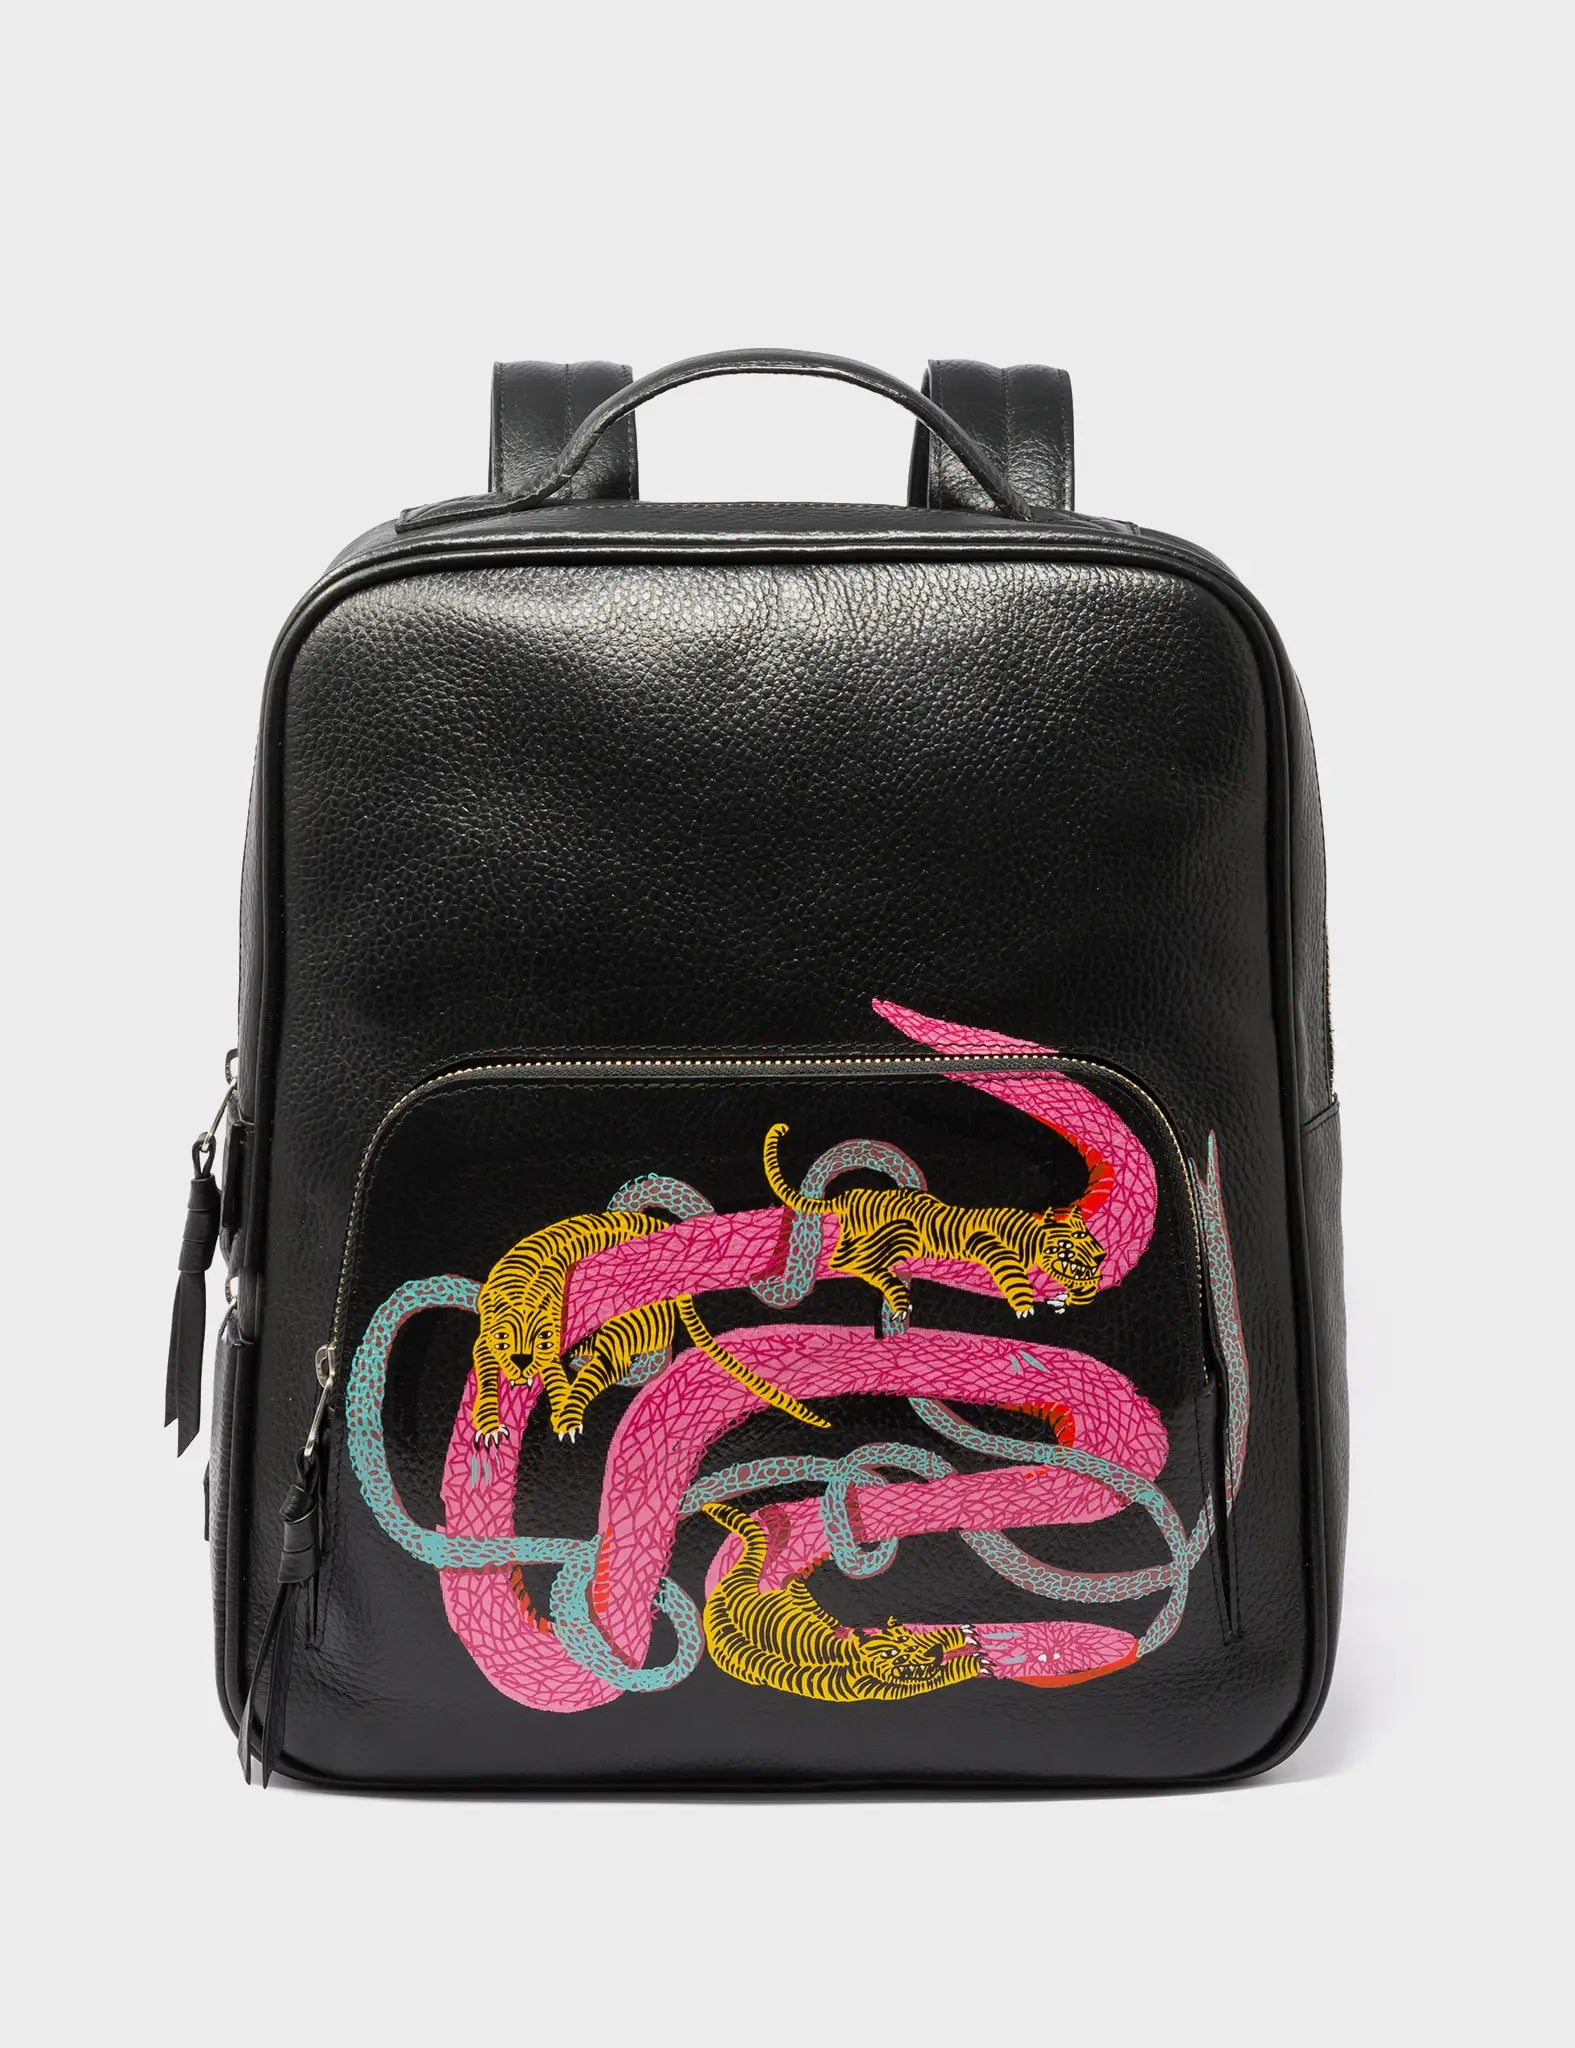 Black Leather Backpack Medium - Tiger and Snake Print - Front